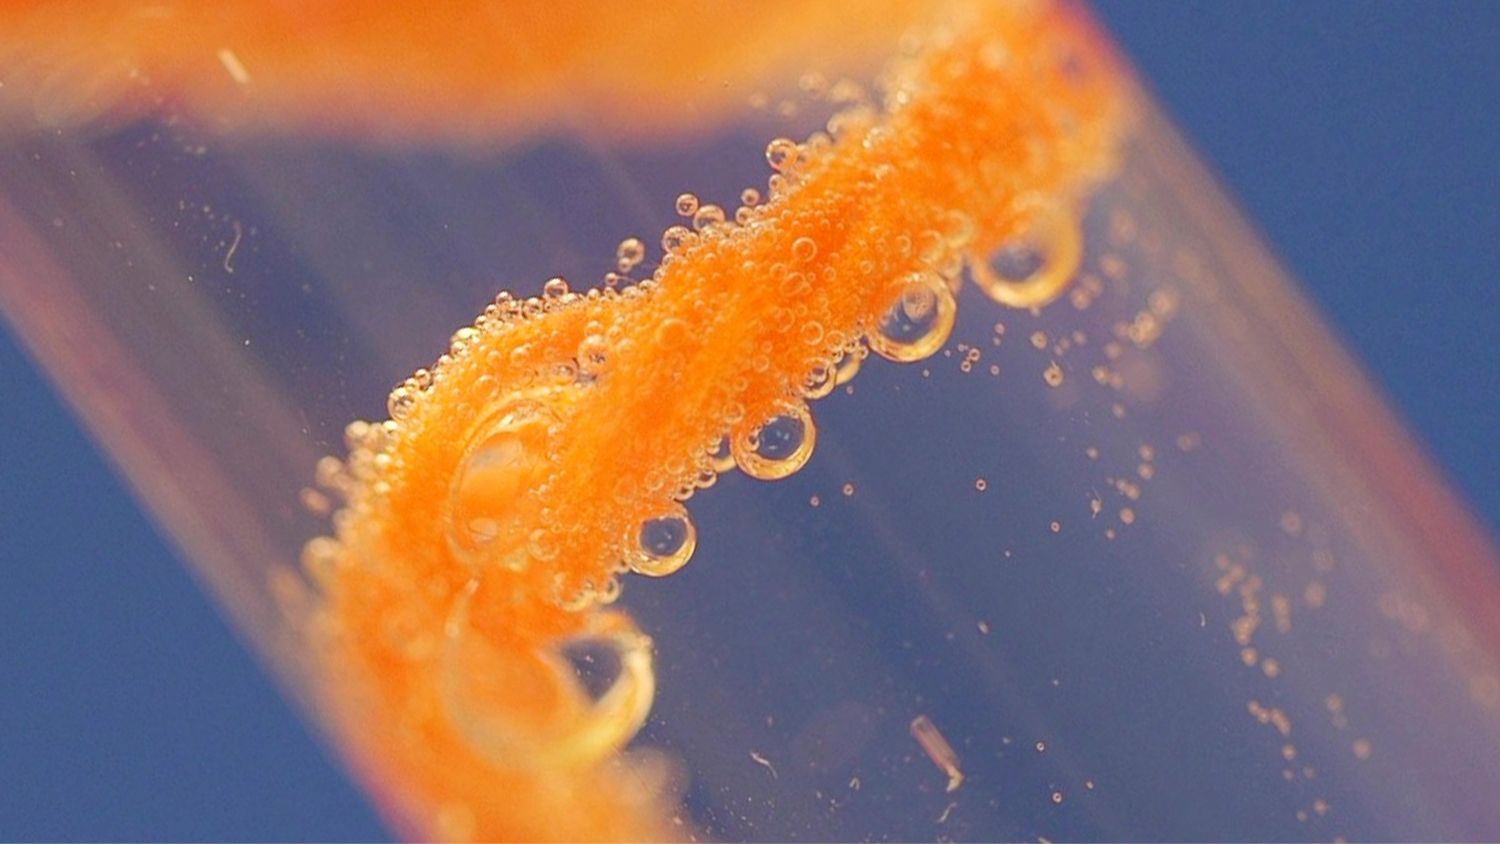 Orange biocatalytic yarn with oxygen bubbles